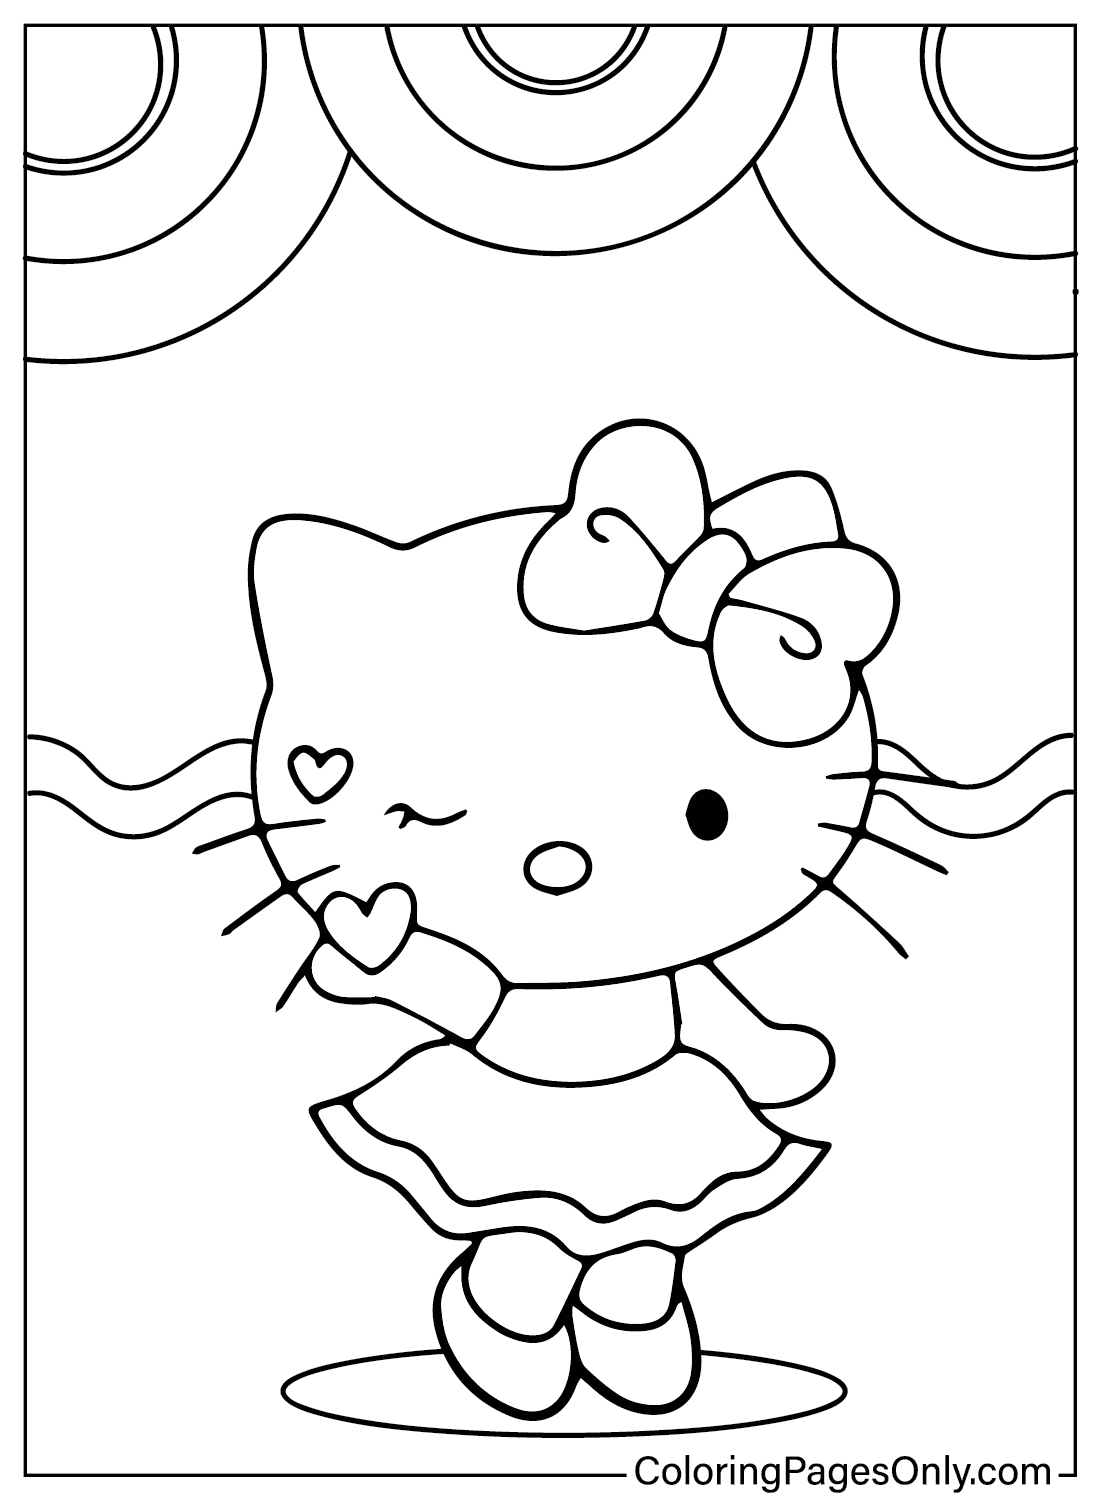 Página para colorir para imprimir da Hello Kitty